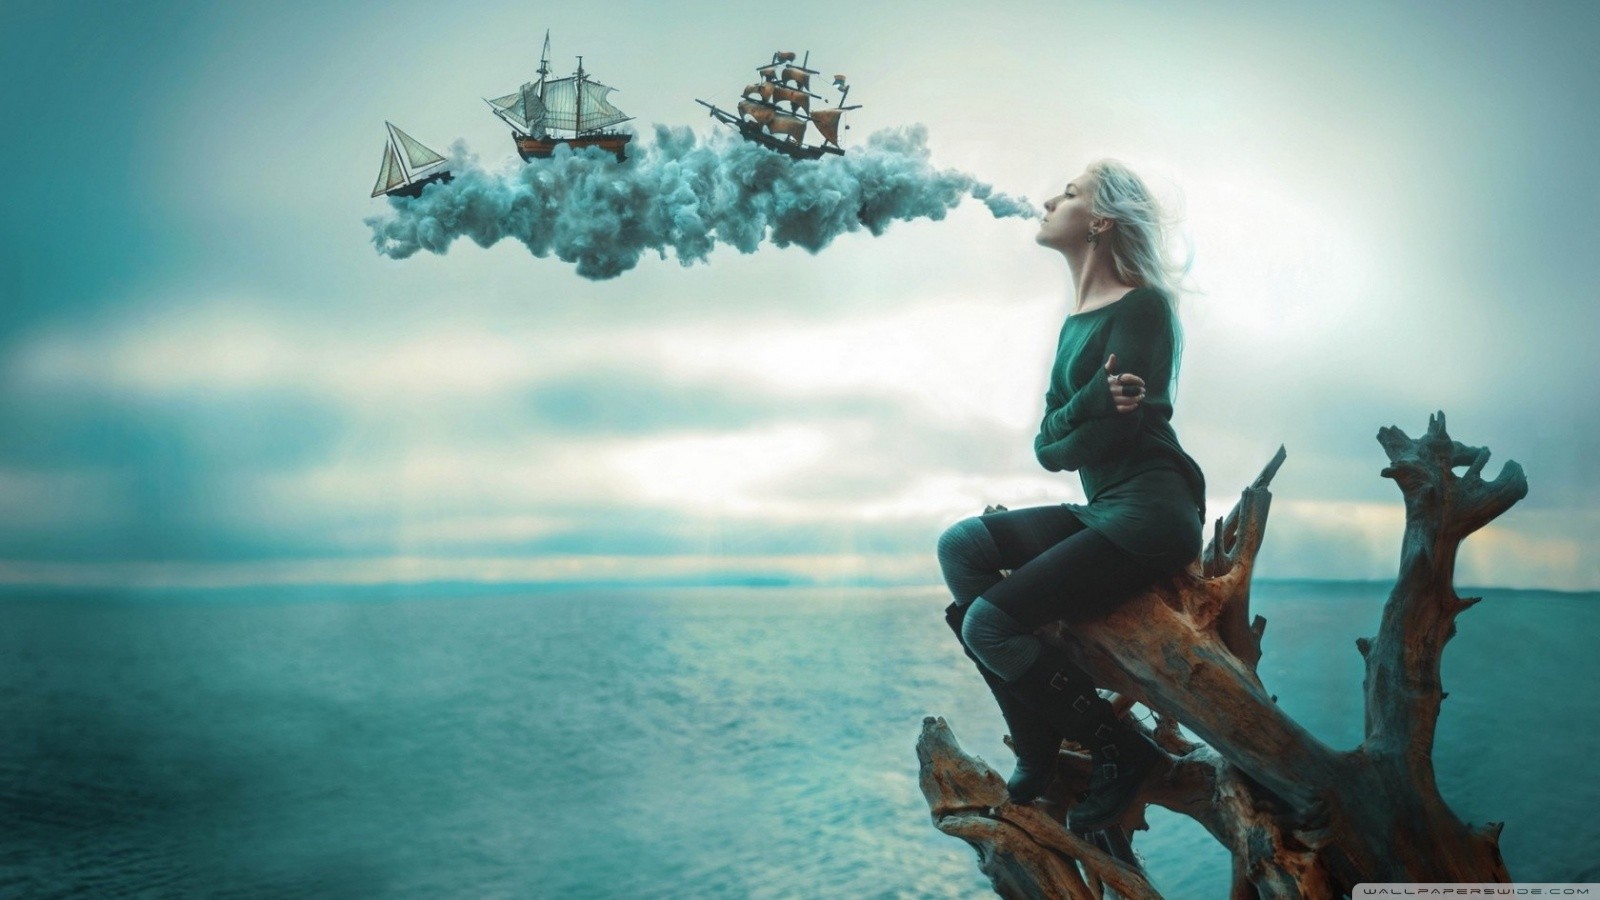 Women Outdoors Surreal Conceptual Digital Art Fairy Tale 1600x900